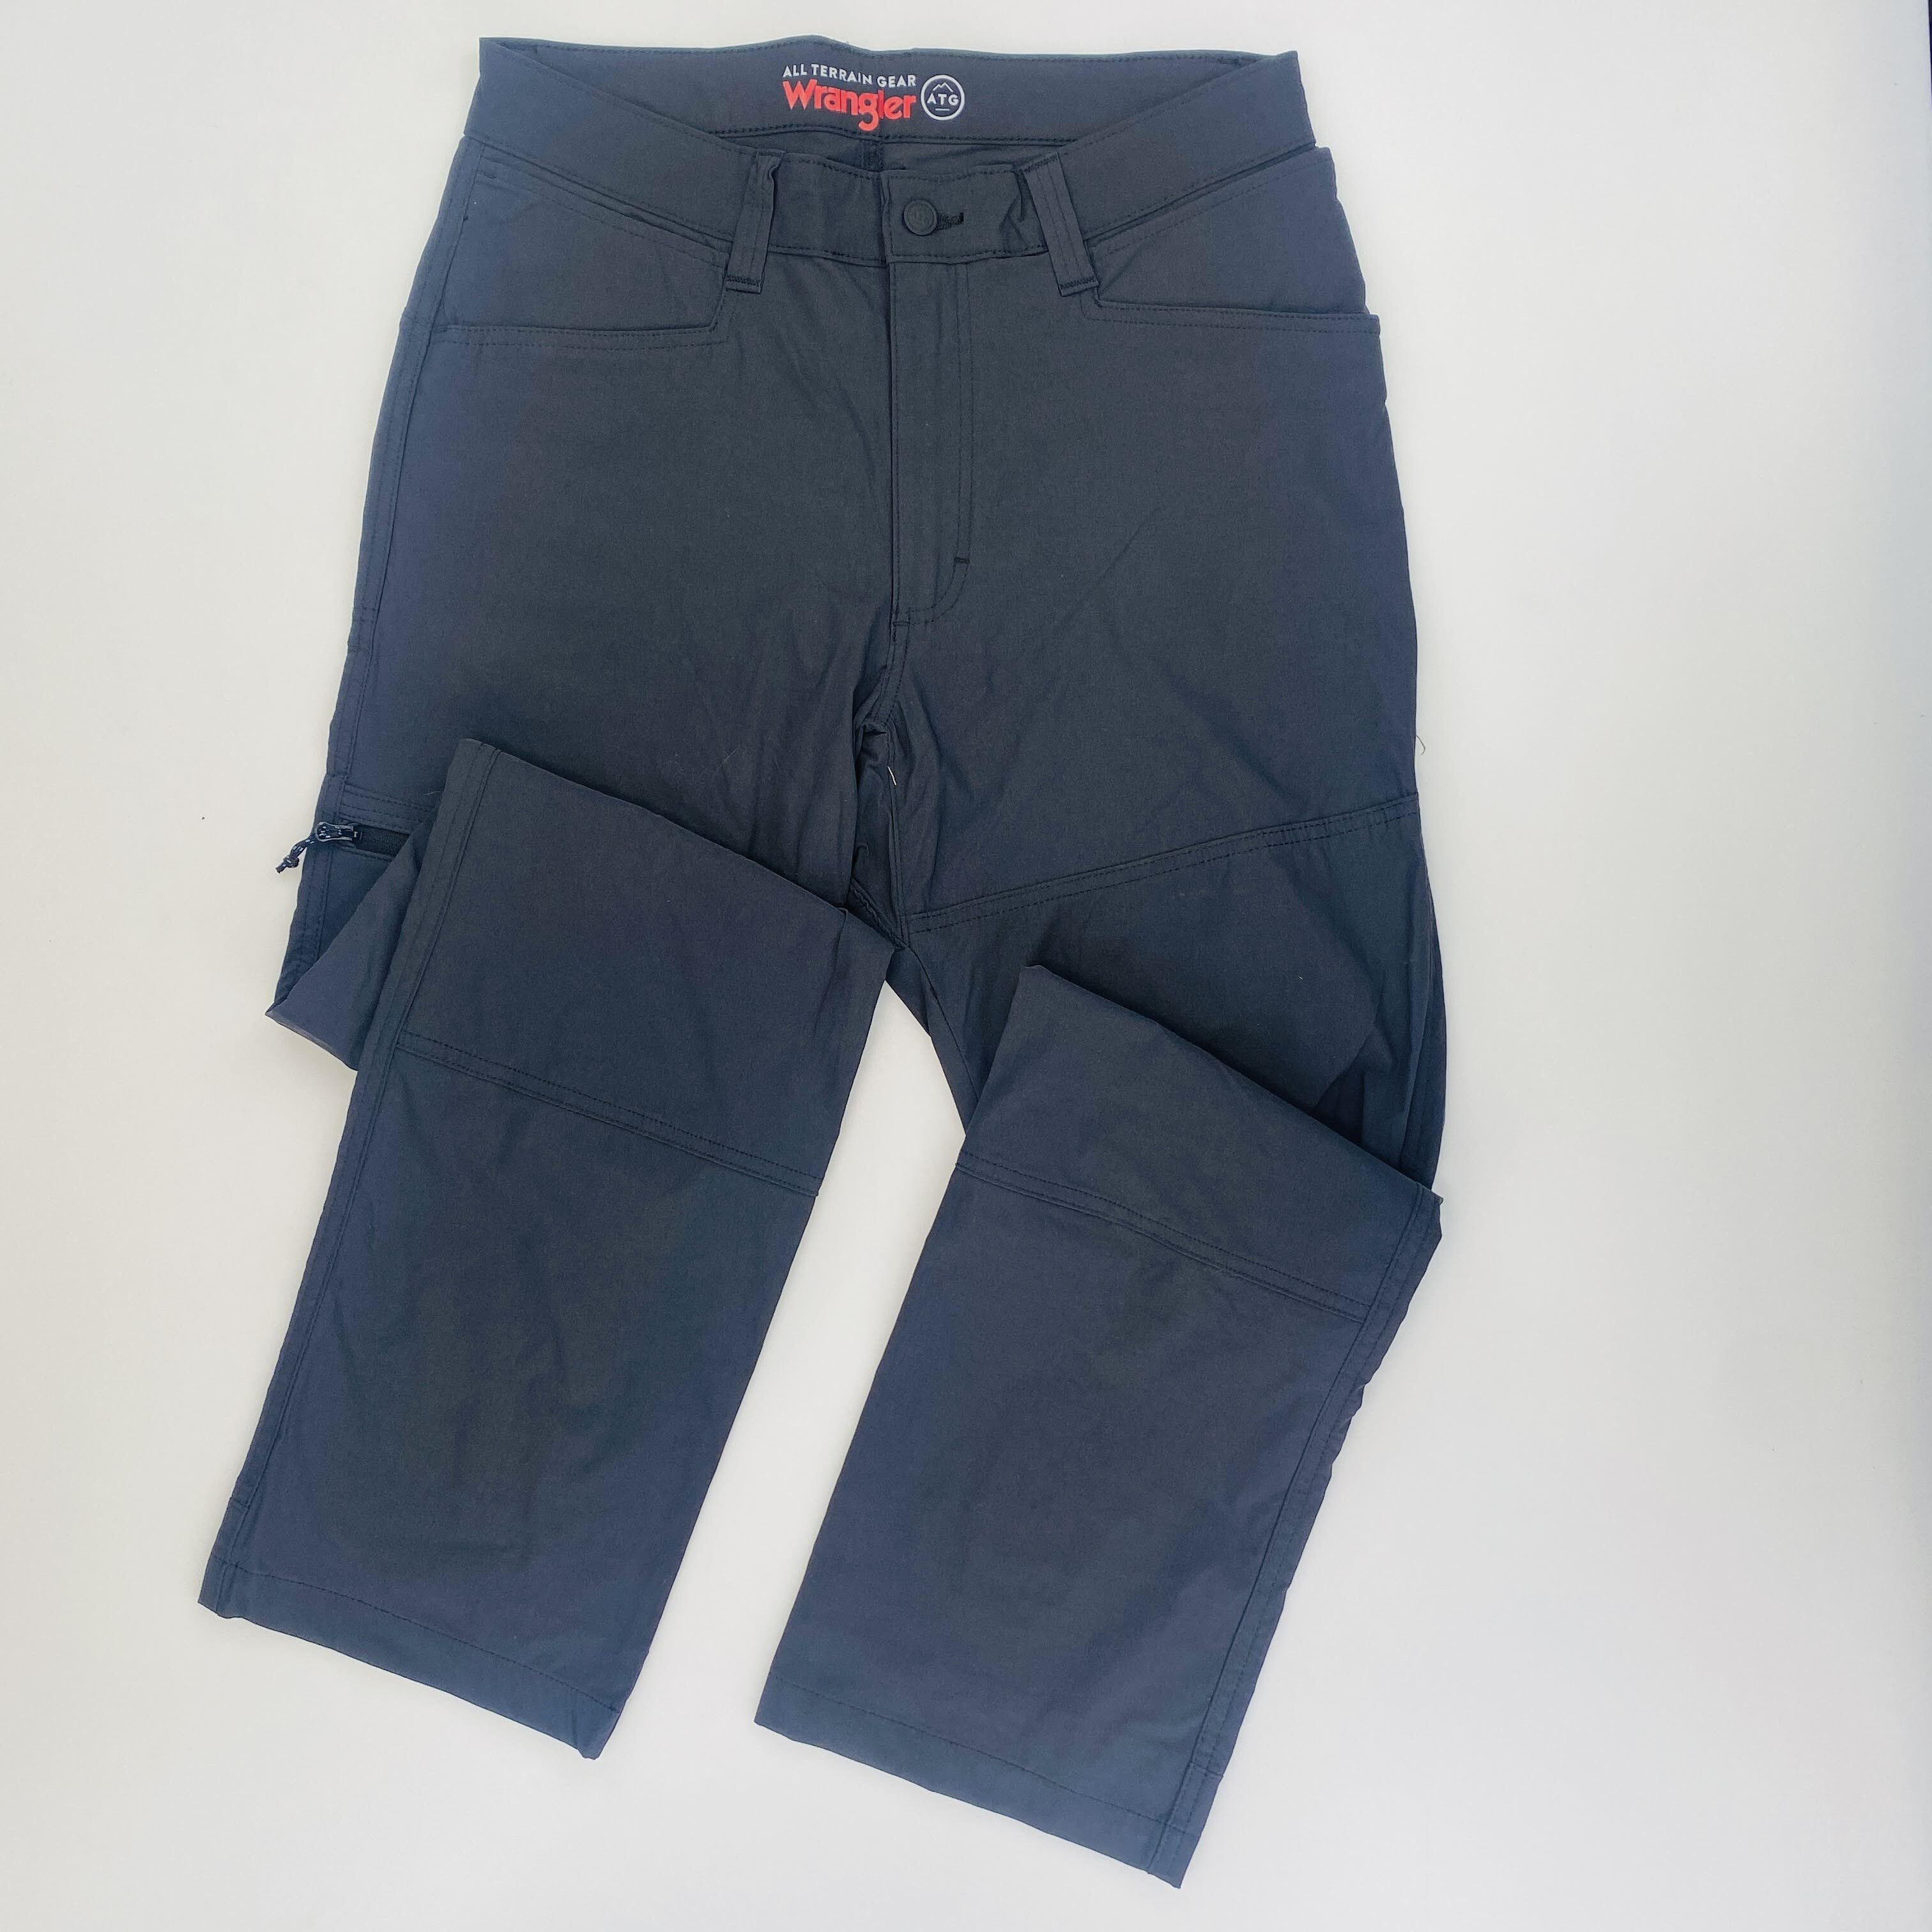 Wrangler Sustainable Zip Pkt - Seconde main Pantalon randonnée homme - Noir - XL | Hardloop